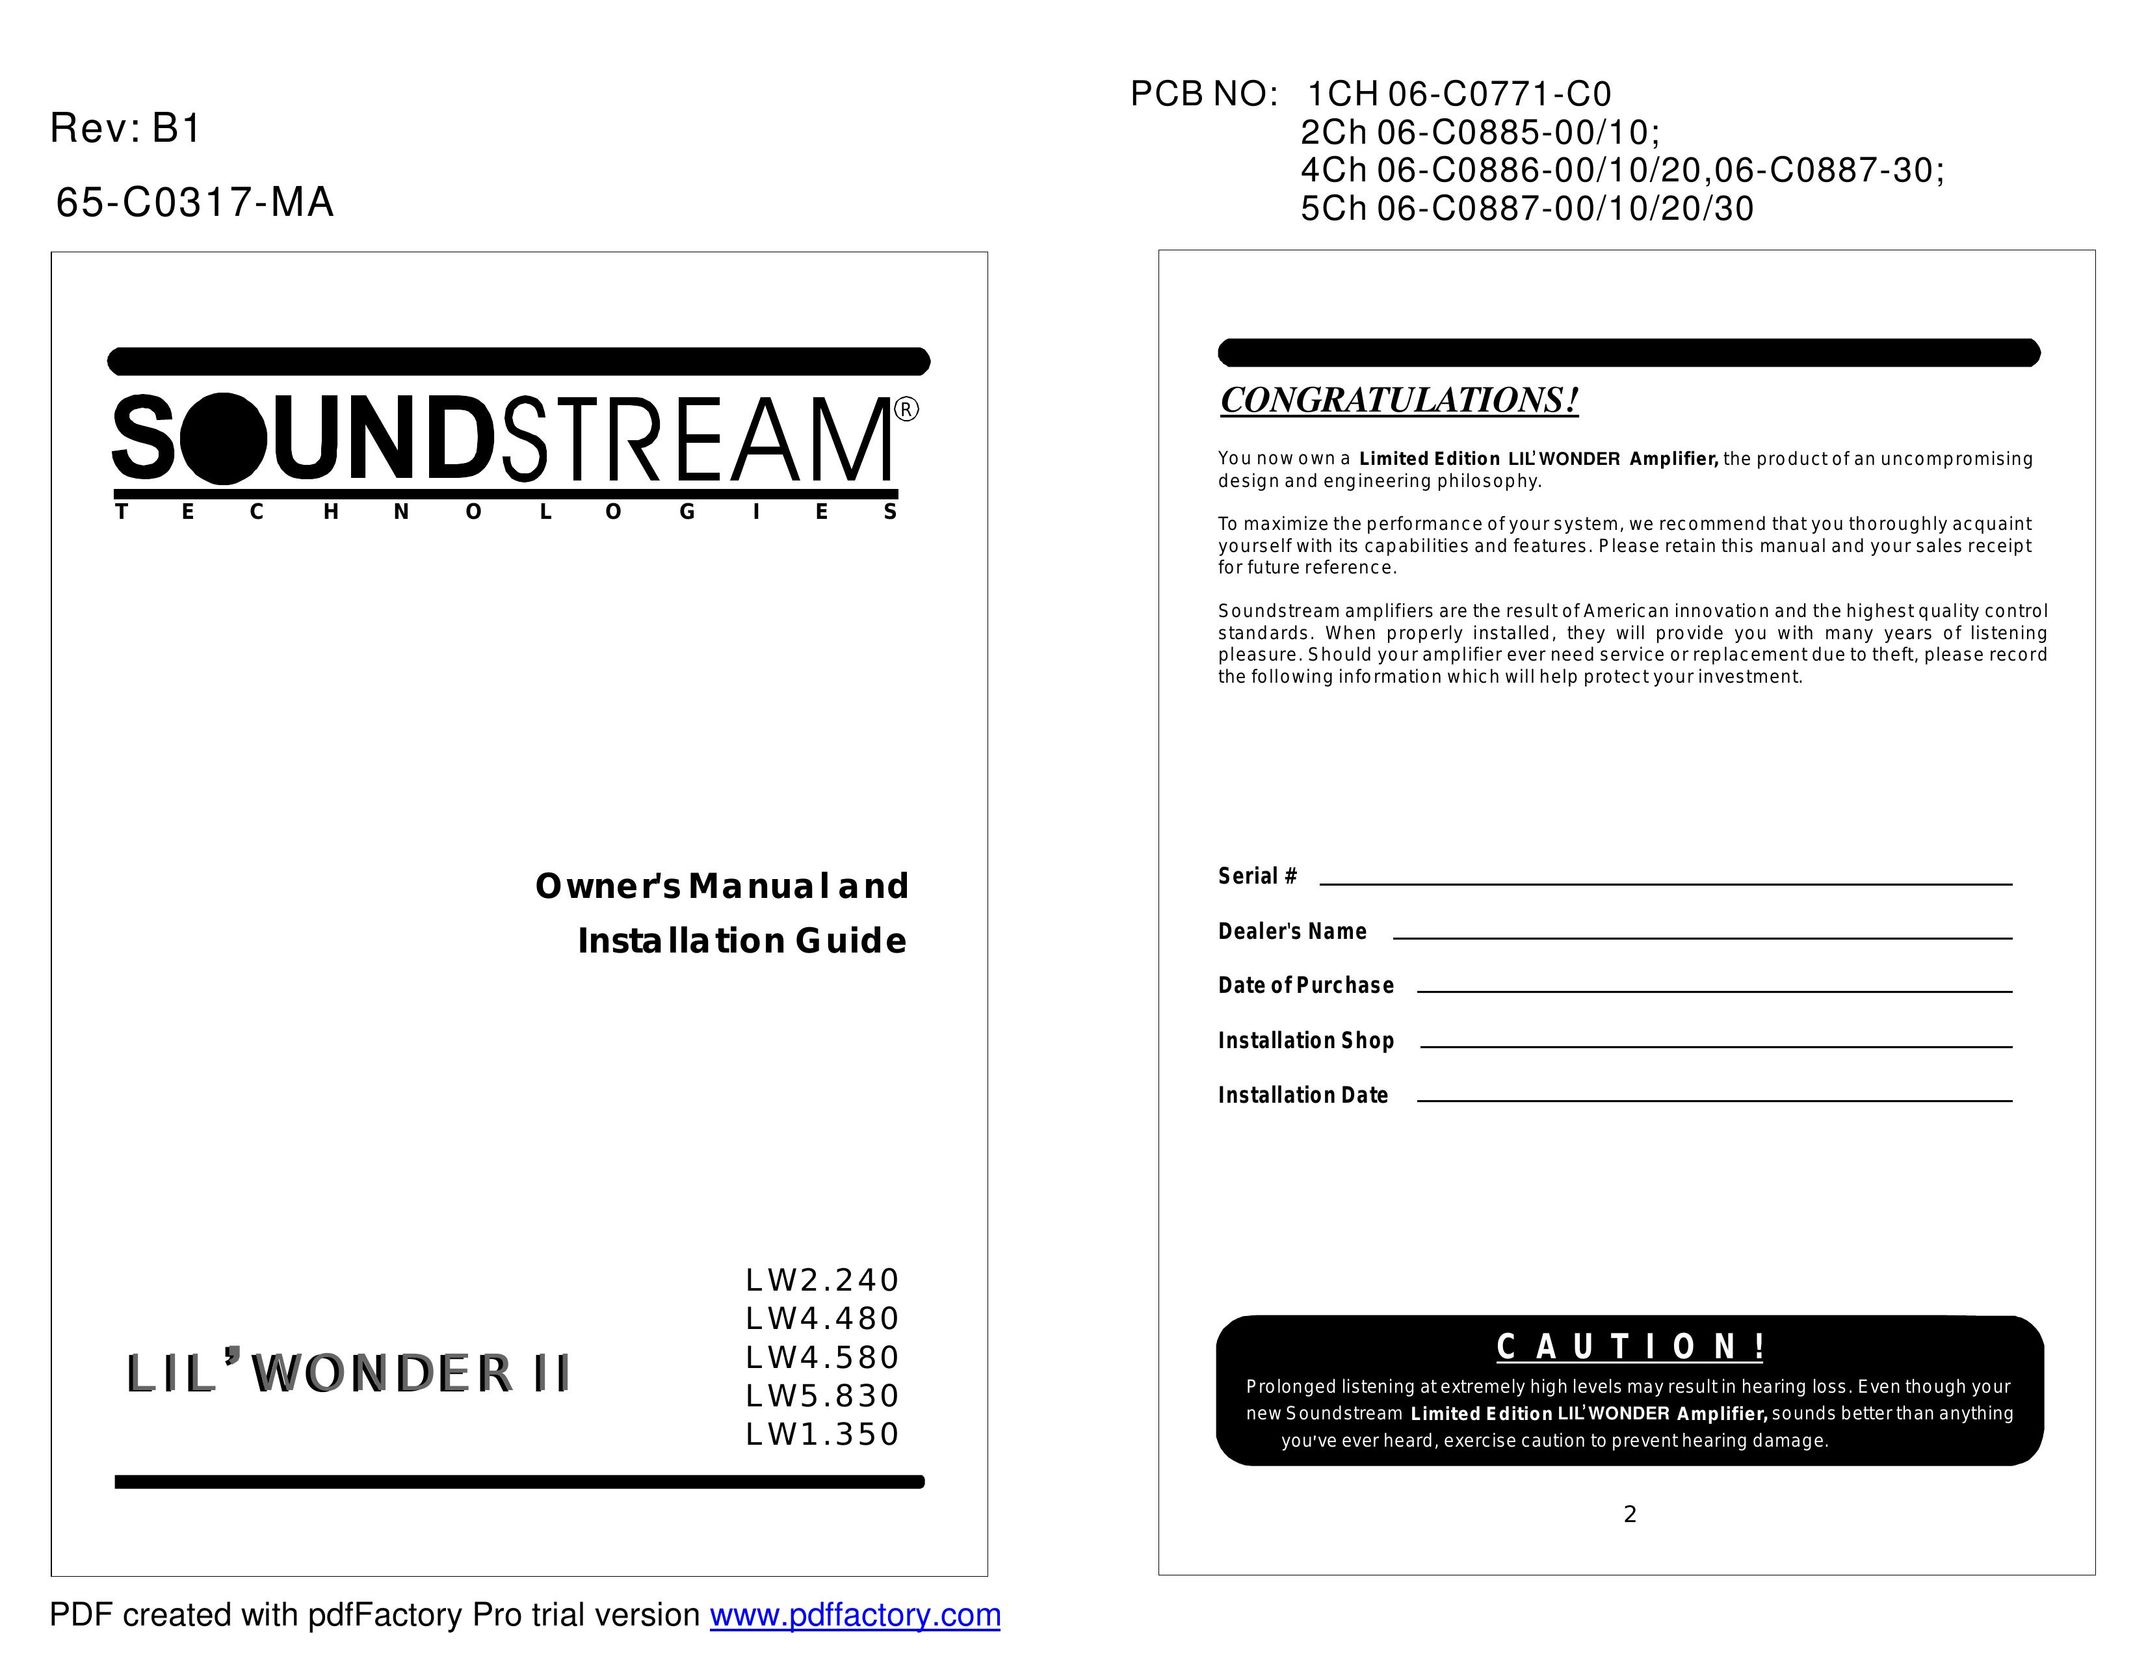 Soundstream Technologies LW5.830 Stereo Amplifier User Manual